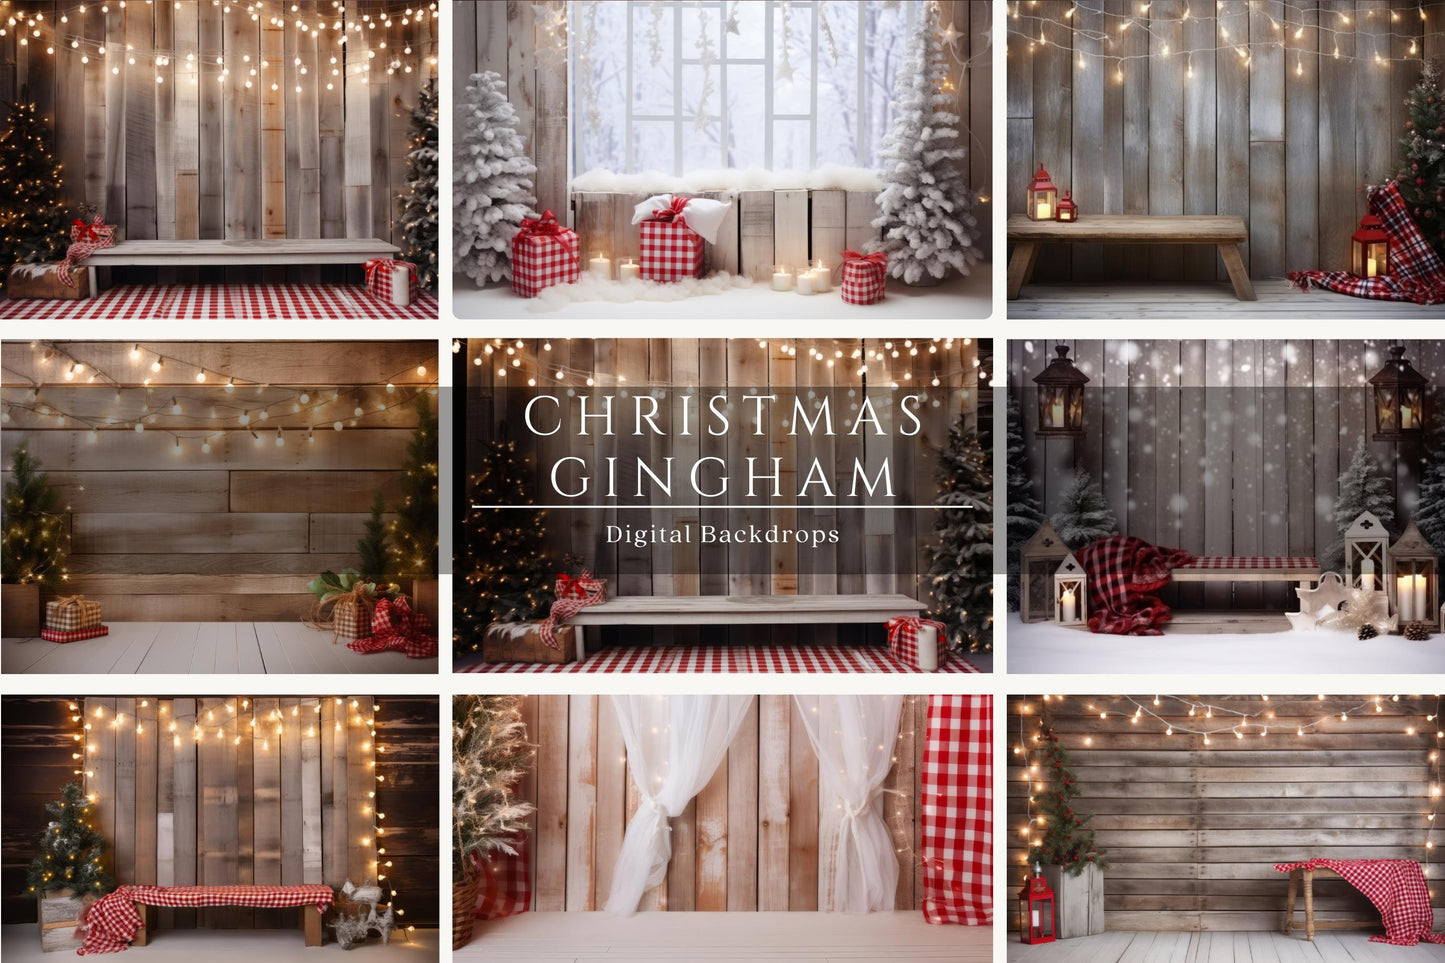 Gingham Christmas Decor Digital Backdrops